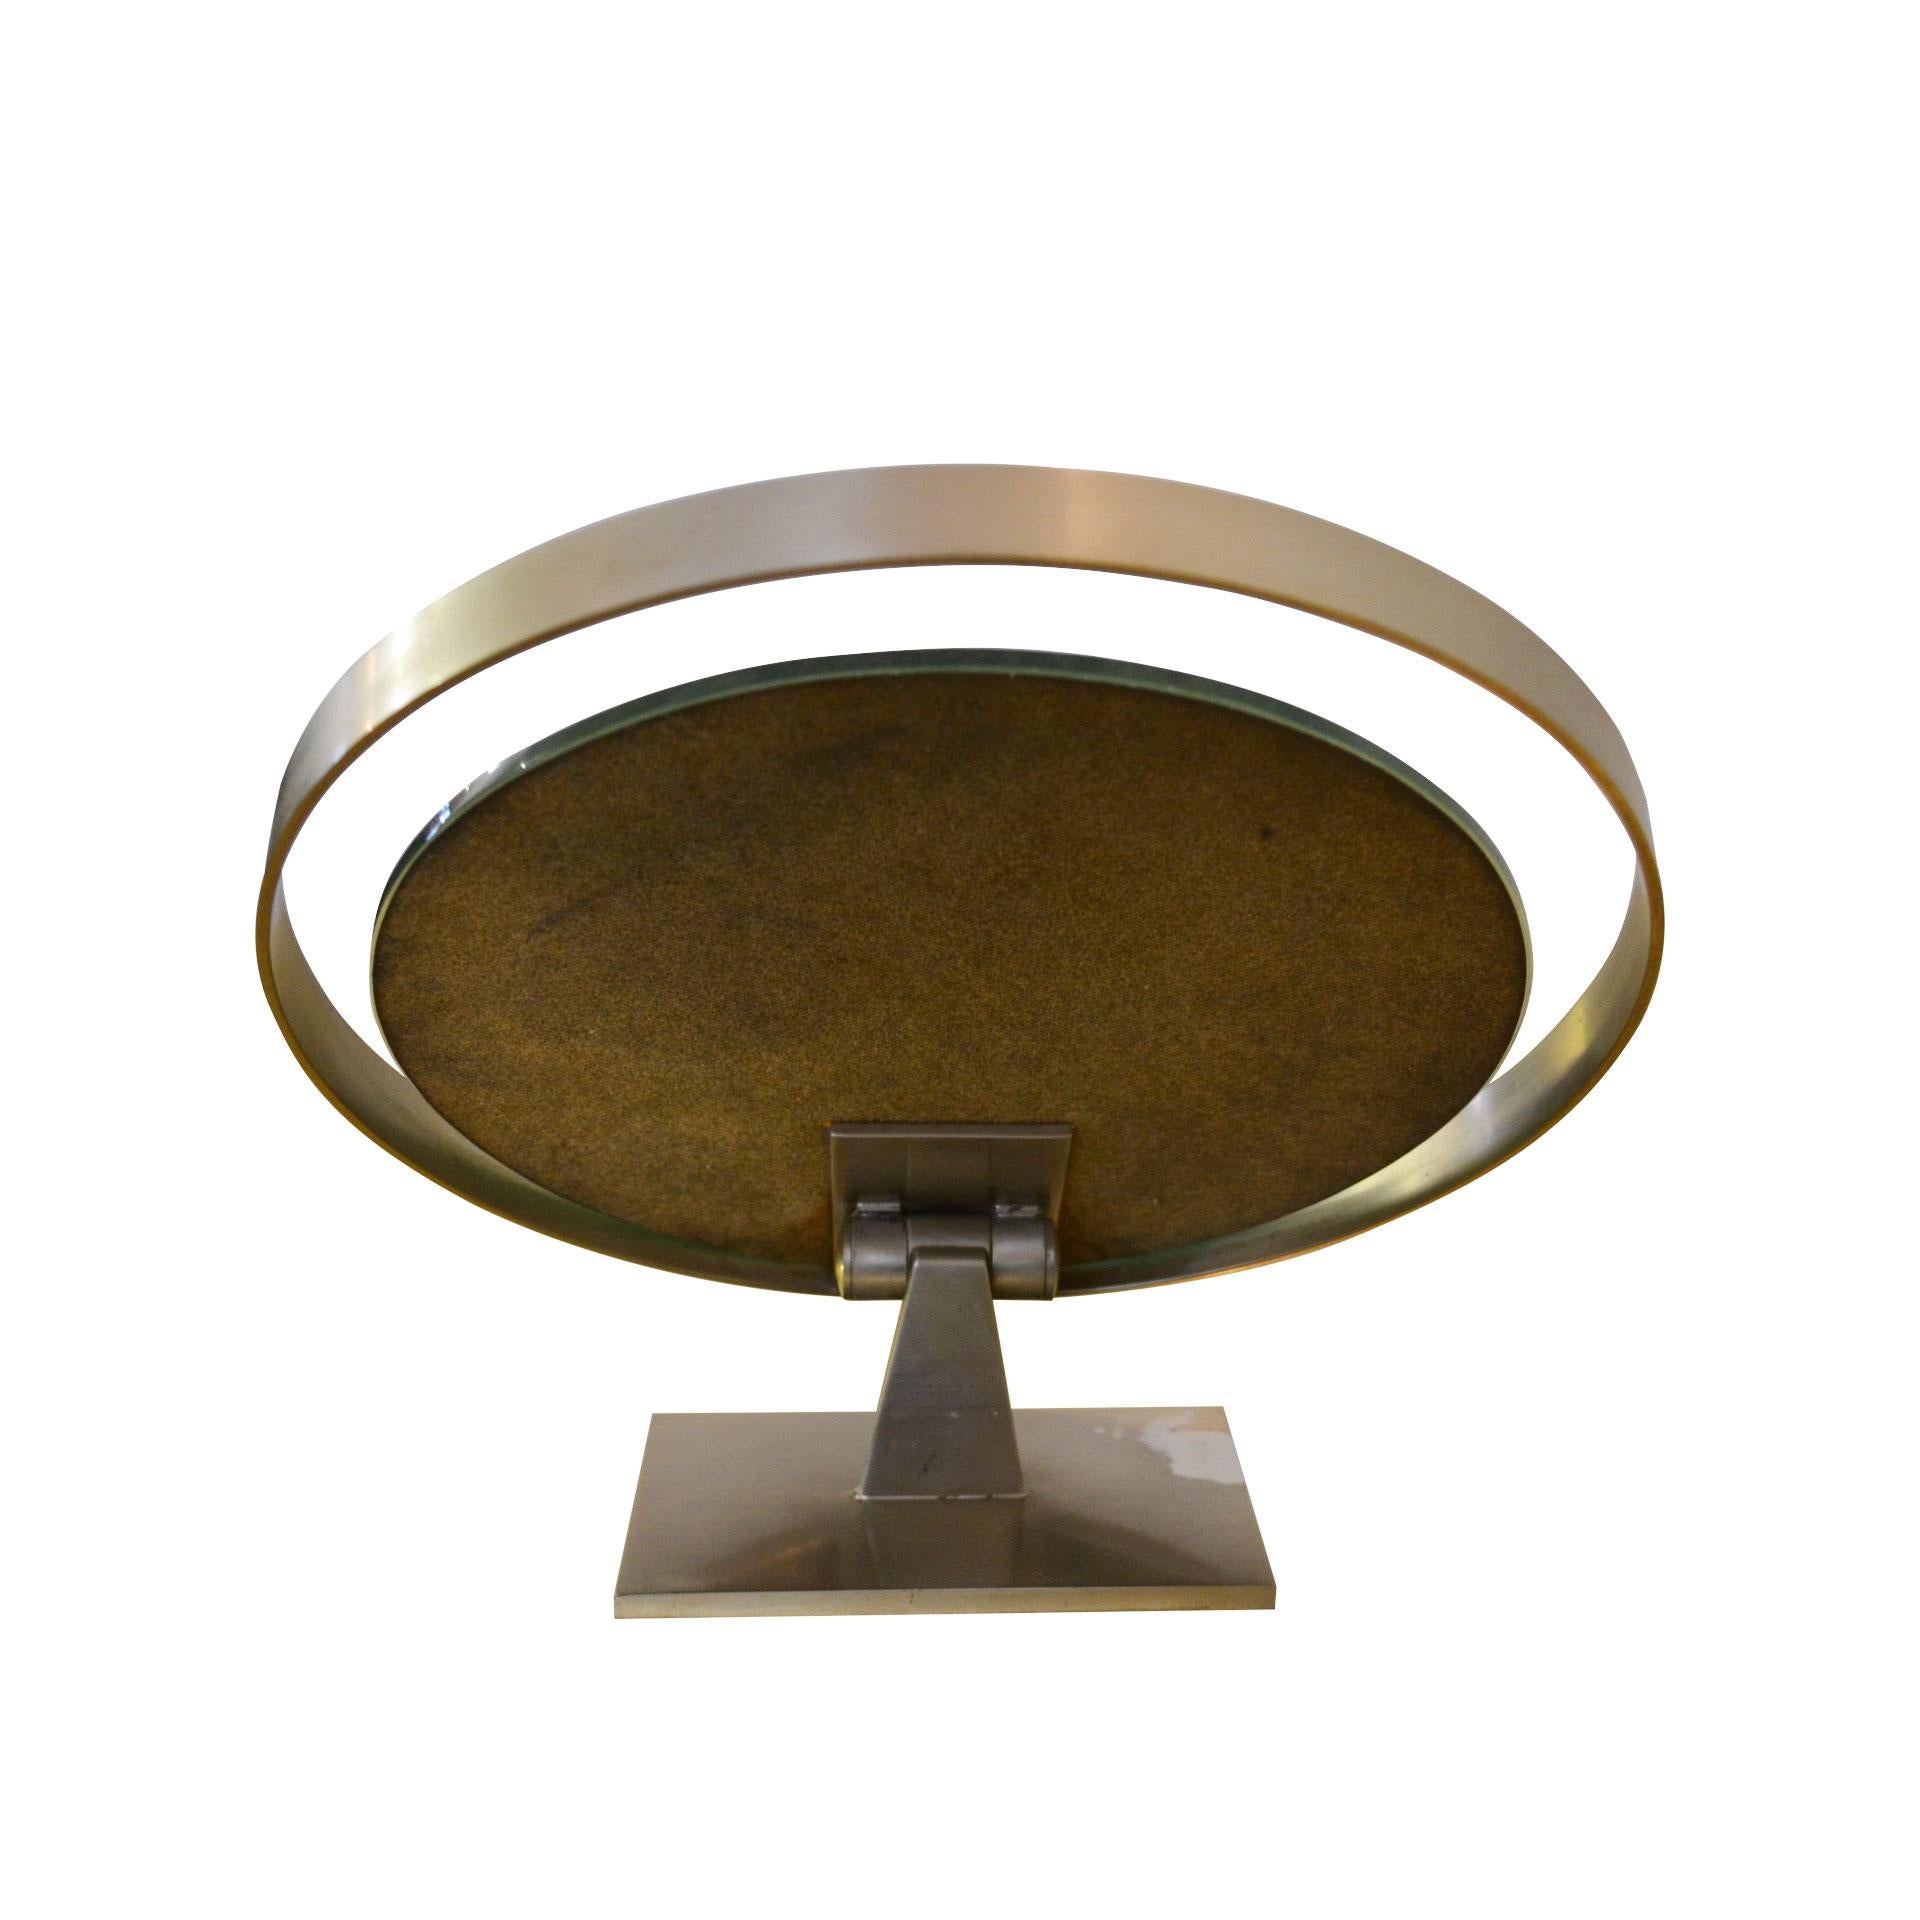 Italian 20th Century Fontana Arte Reclining Table Mirror Mod. 2153 in Brass